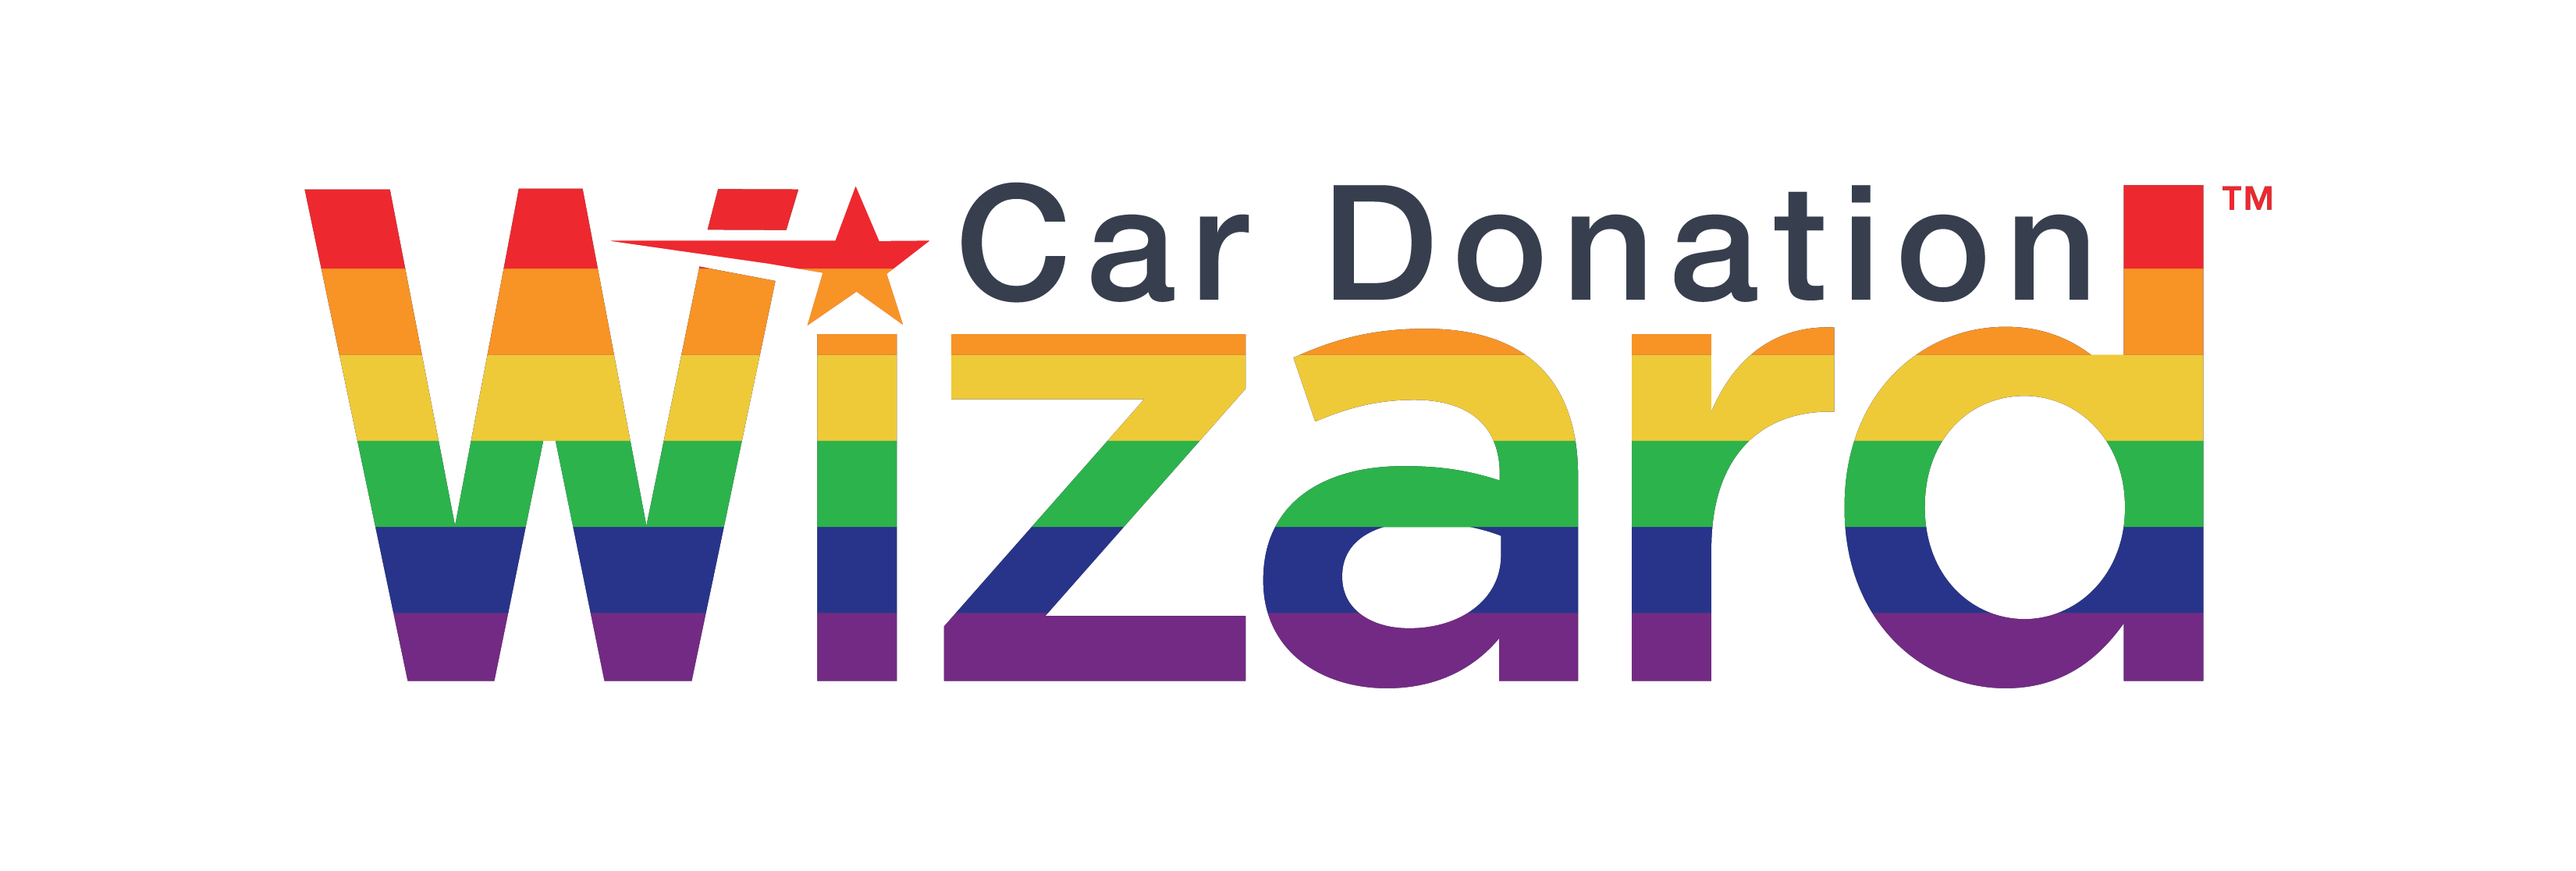 Car Donation Wizard